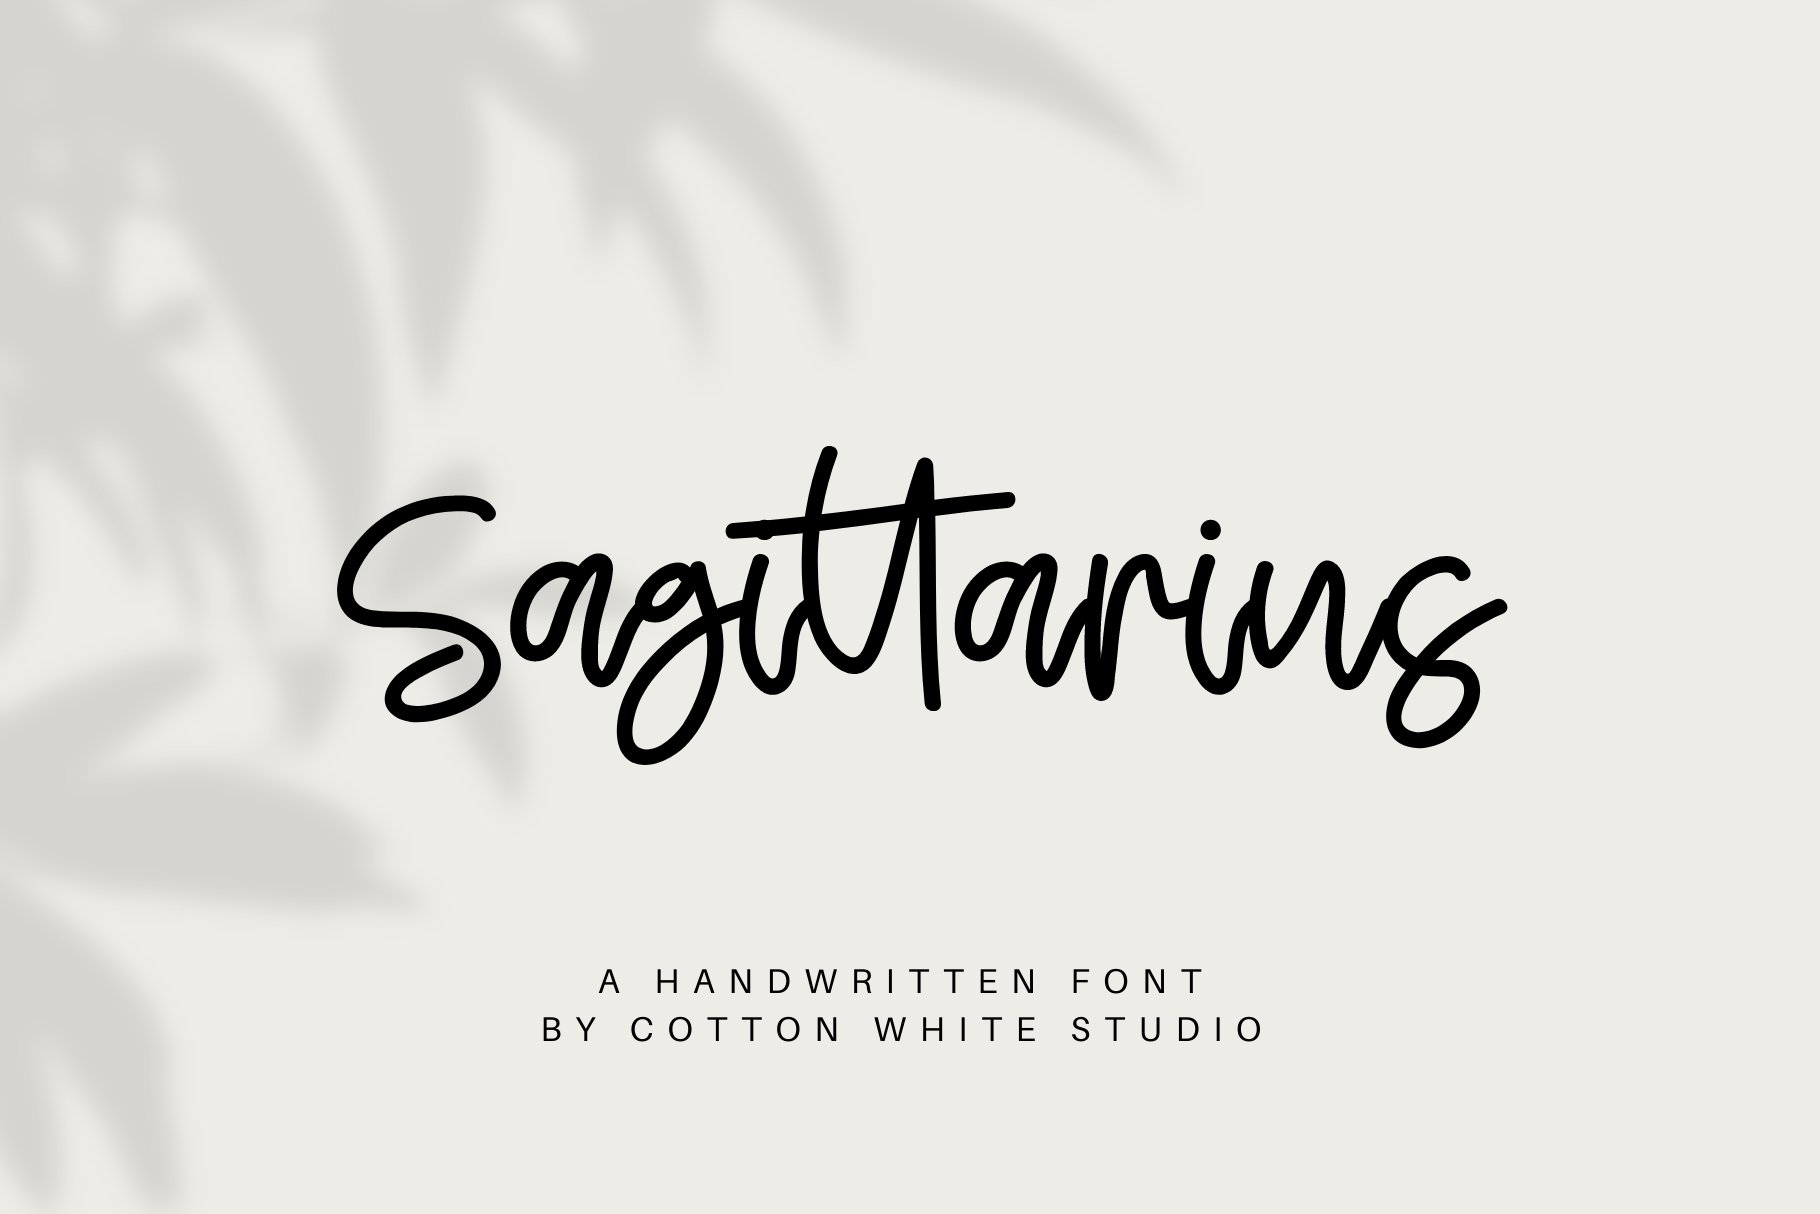 Sagittarius Messy Handwriting cover image.